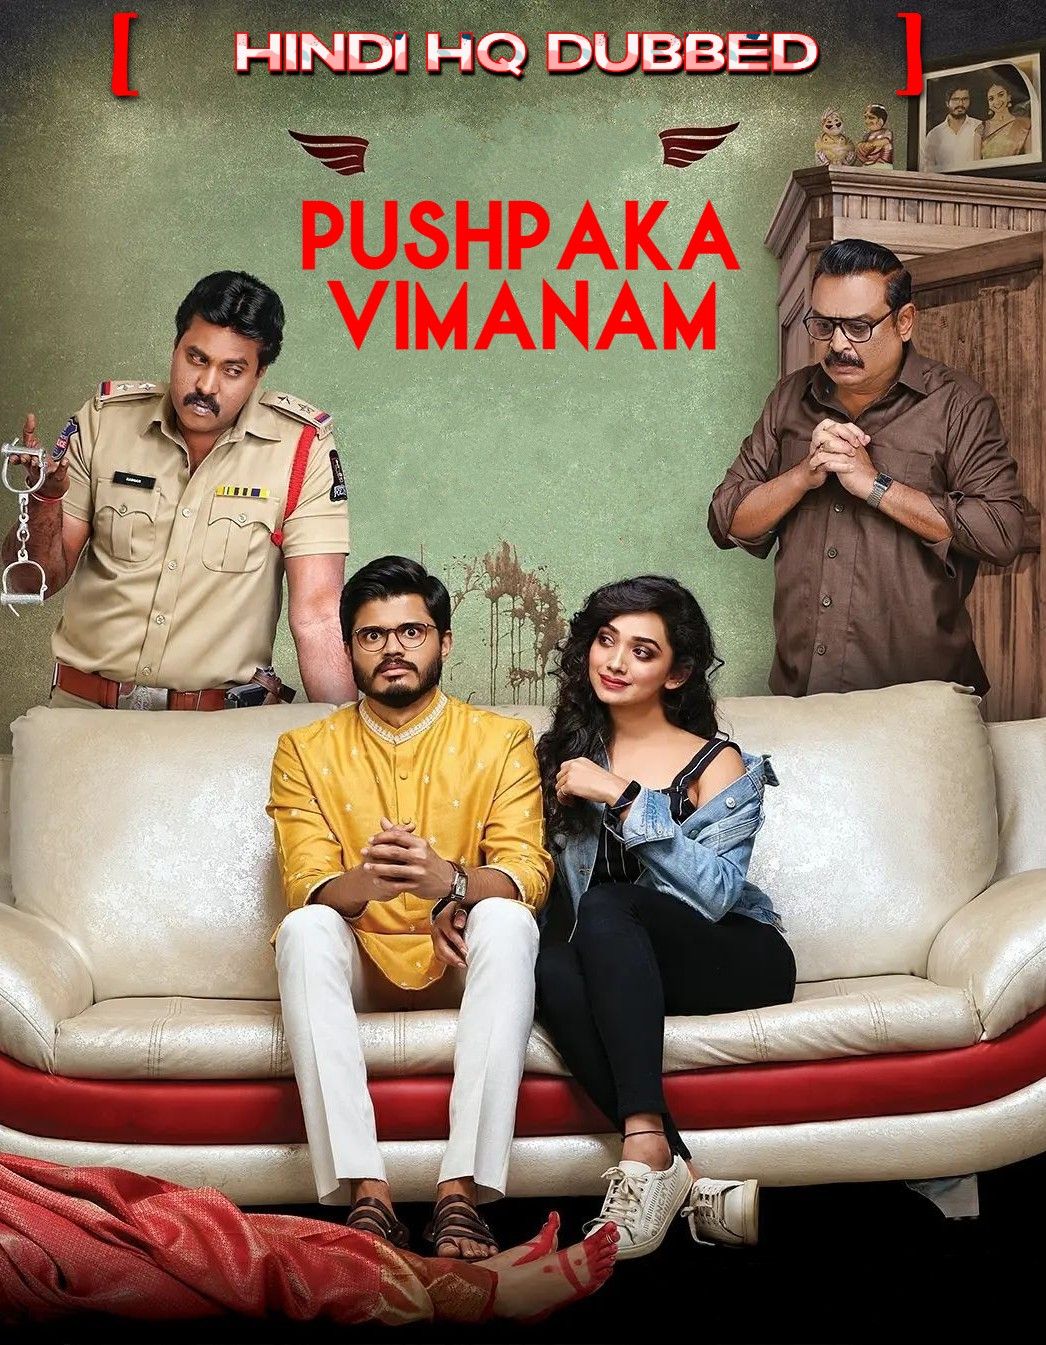 Pushpaka Vimanam (2021) Hindi [HQ Dubbed] HDRip download full movie